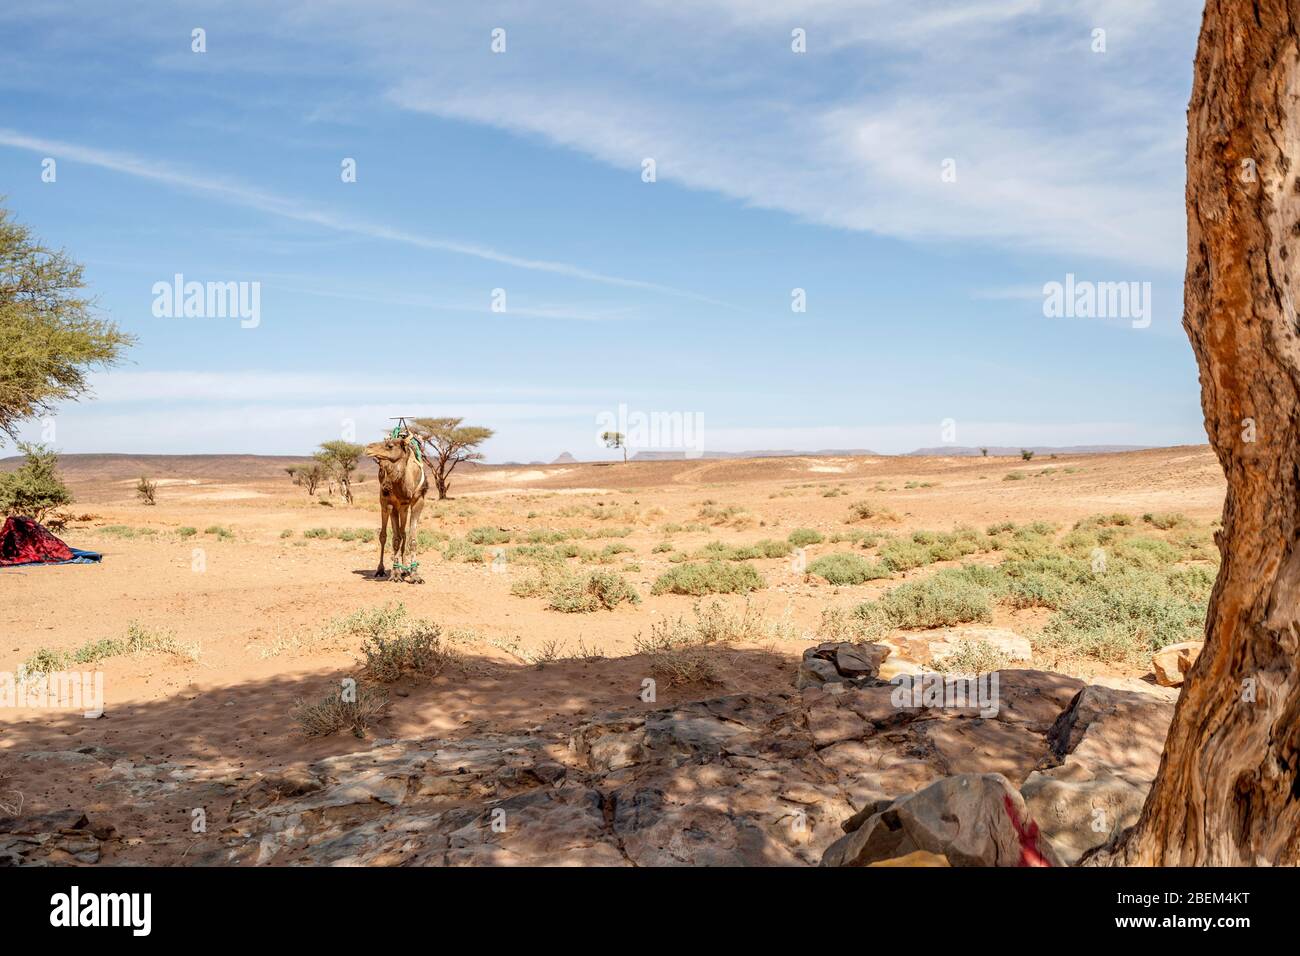 Dromedary camel in the oasis on Sahara Desert in Morocco, Africa Stock Photo